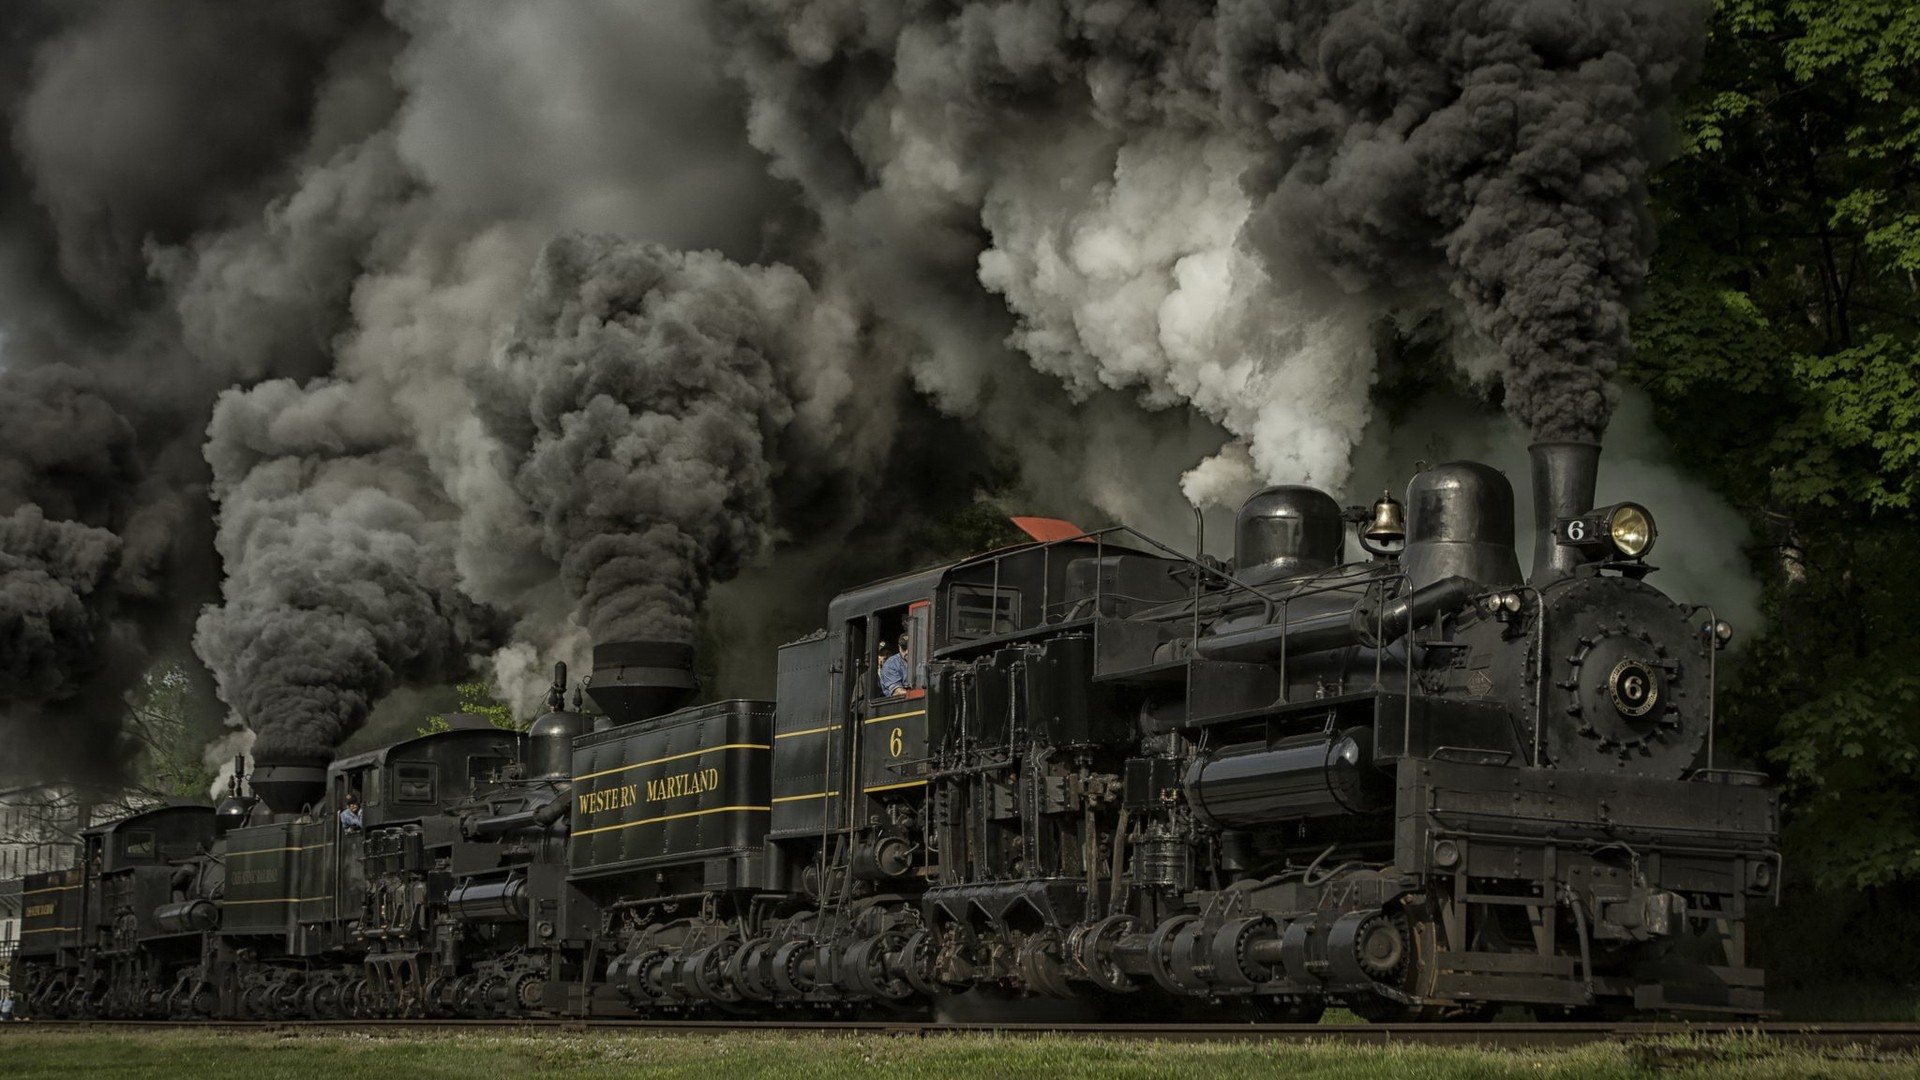 General 1920x1080 train steam locomotive dust railway wheels USA nature trees grass smoke vehicle